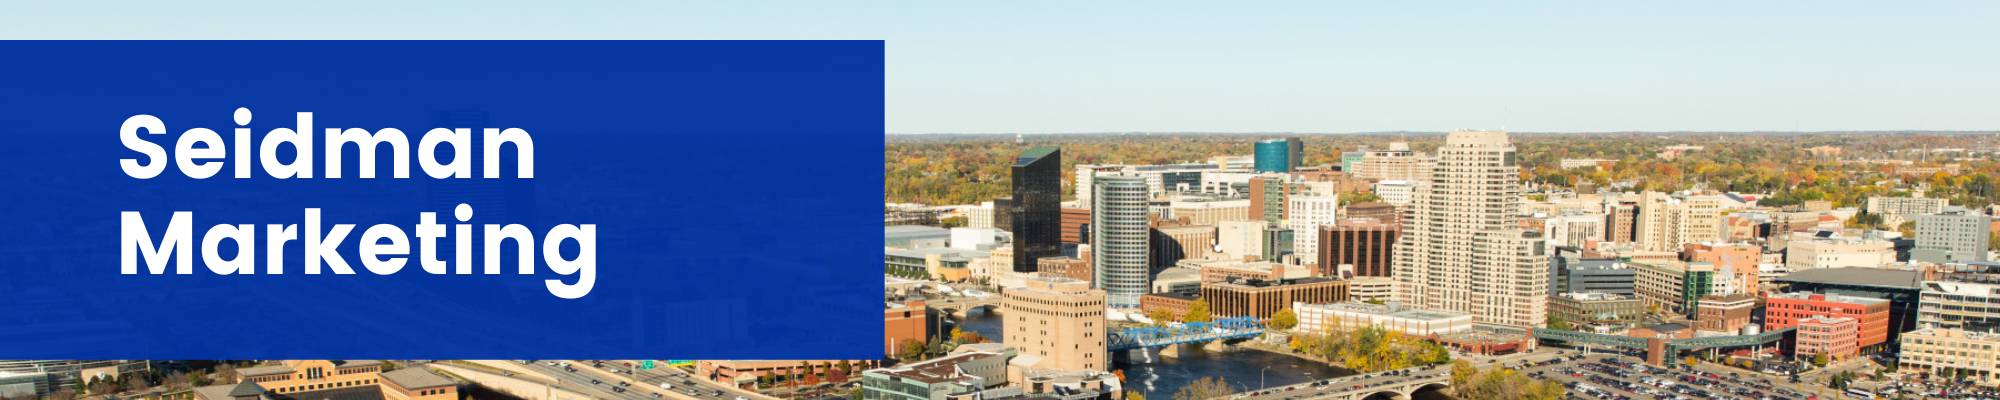 Seidman Marketing - photo of Grand Rapids cityscape